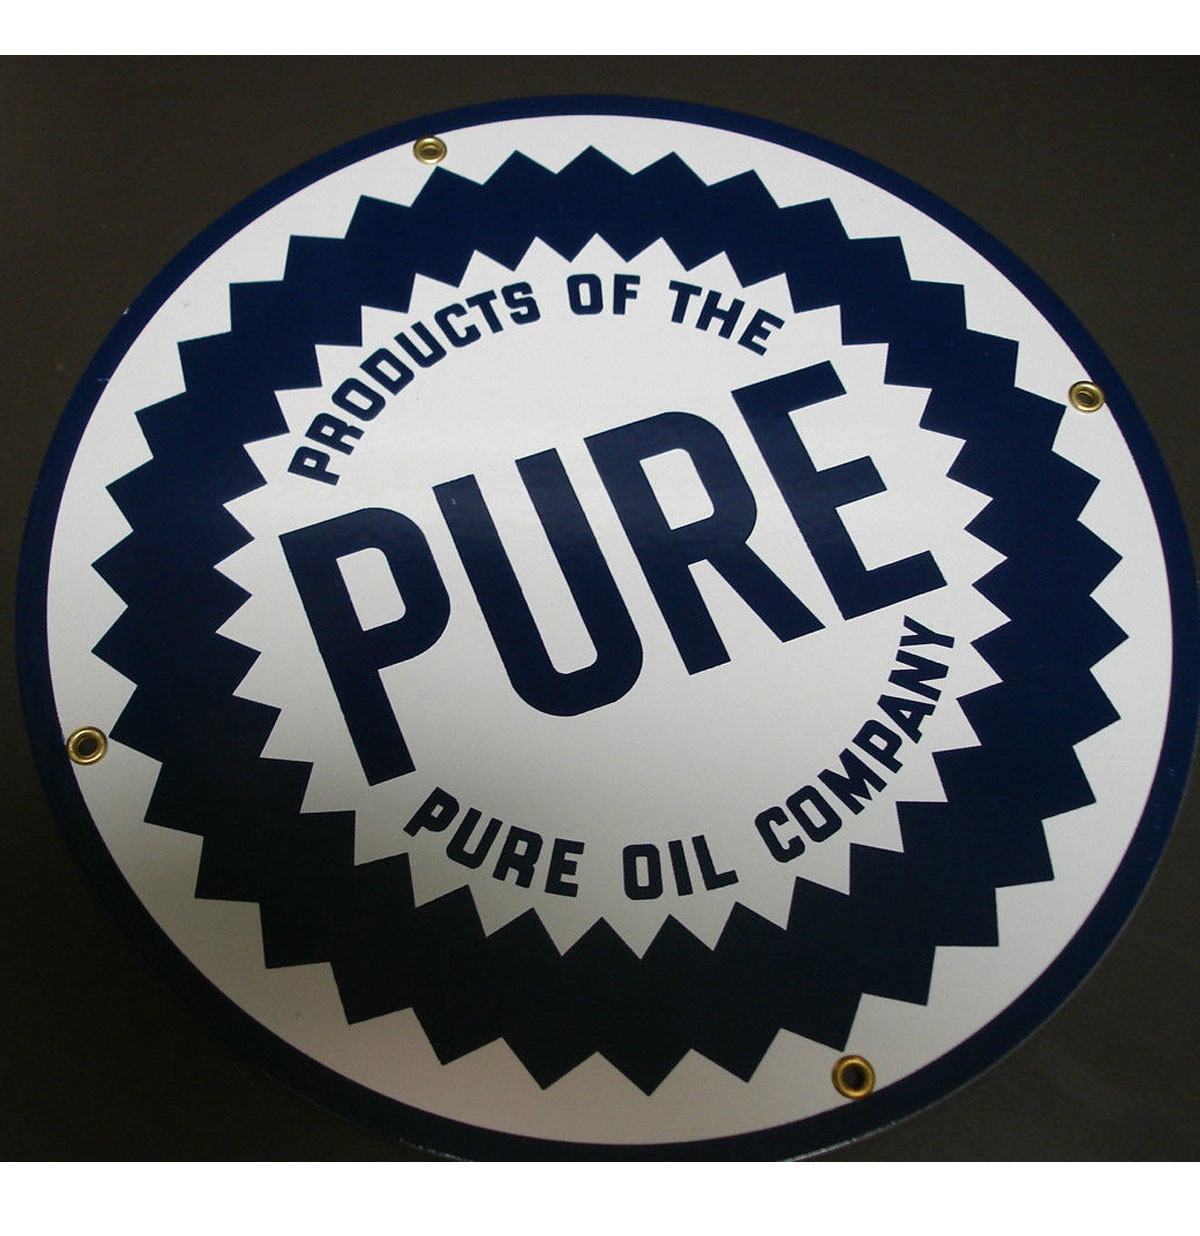 Pure Oil Company emaille bord